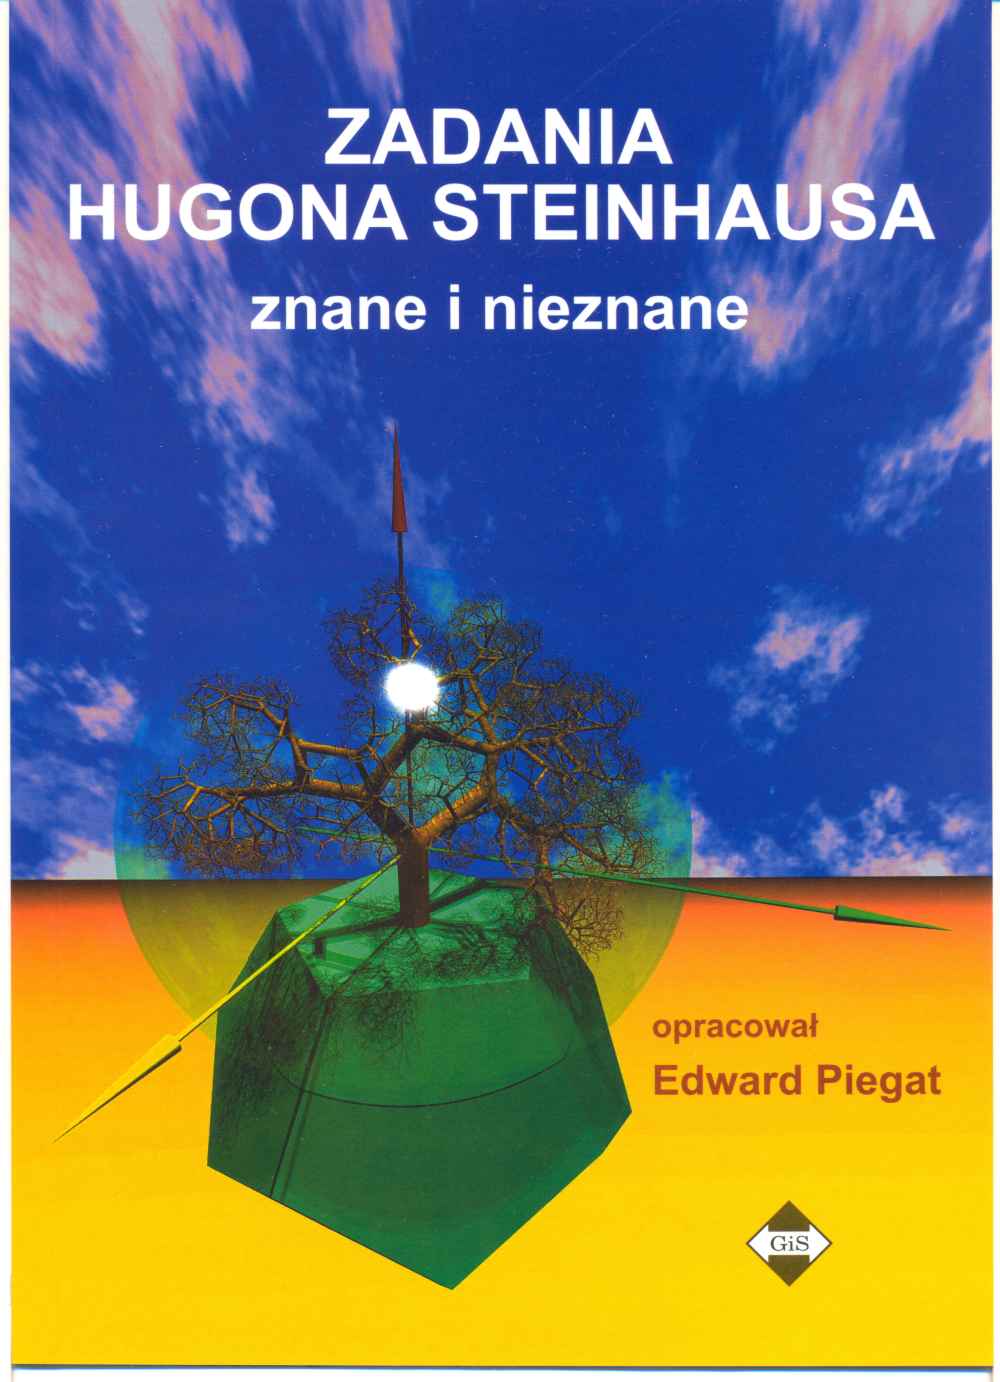 Zadania Hugona Steinhausa. Okładka